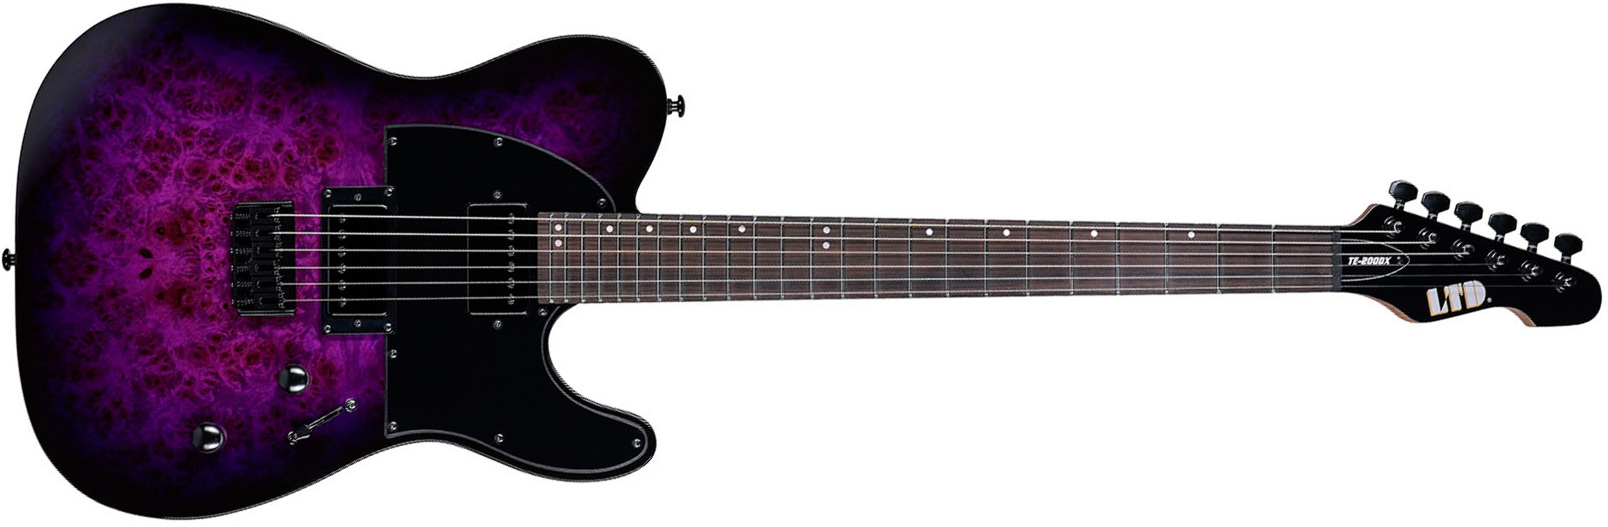 Ltd Te200dx 2h Ht Rw - Purple Burst - Televorm elektrische gitaar - Main picture